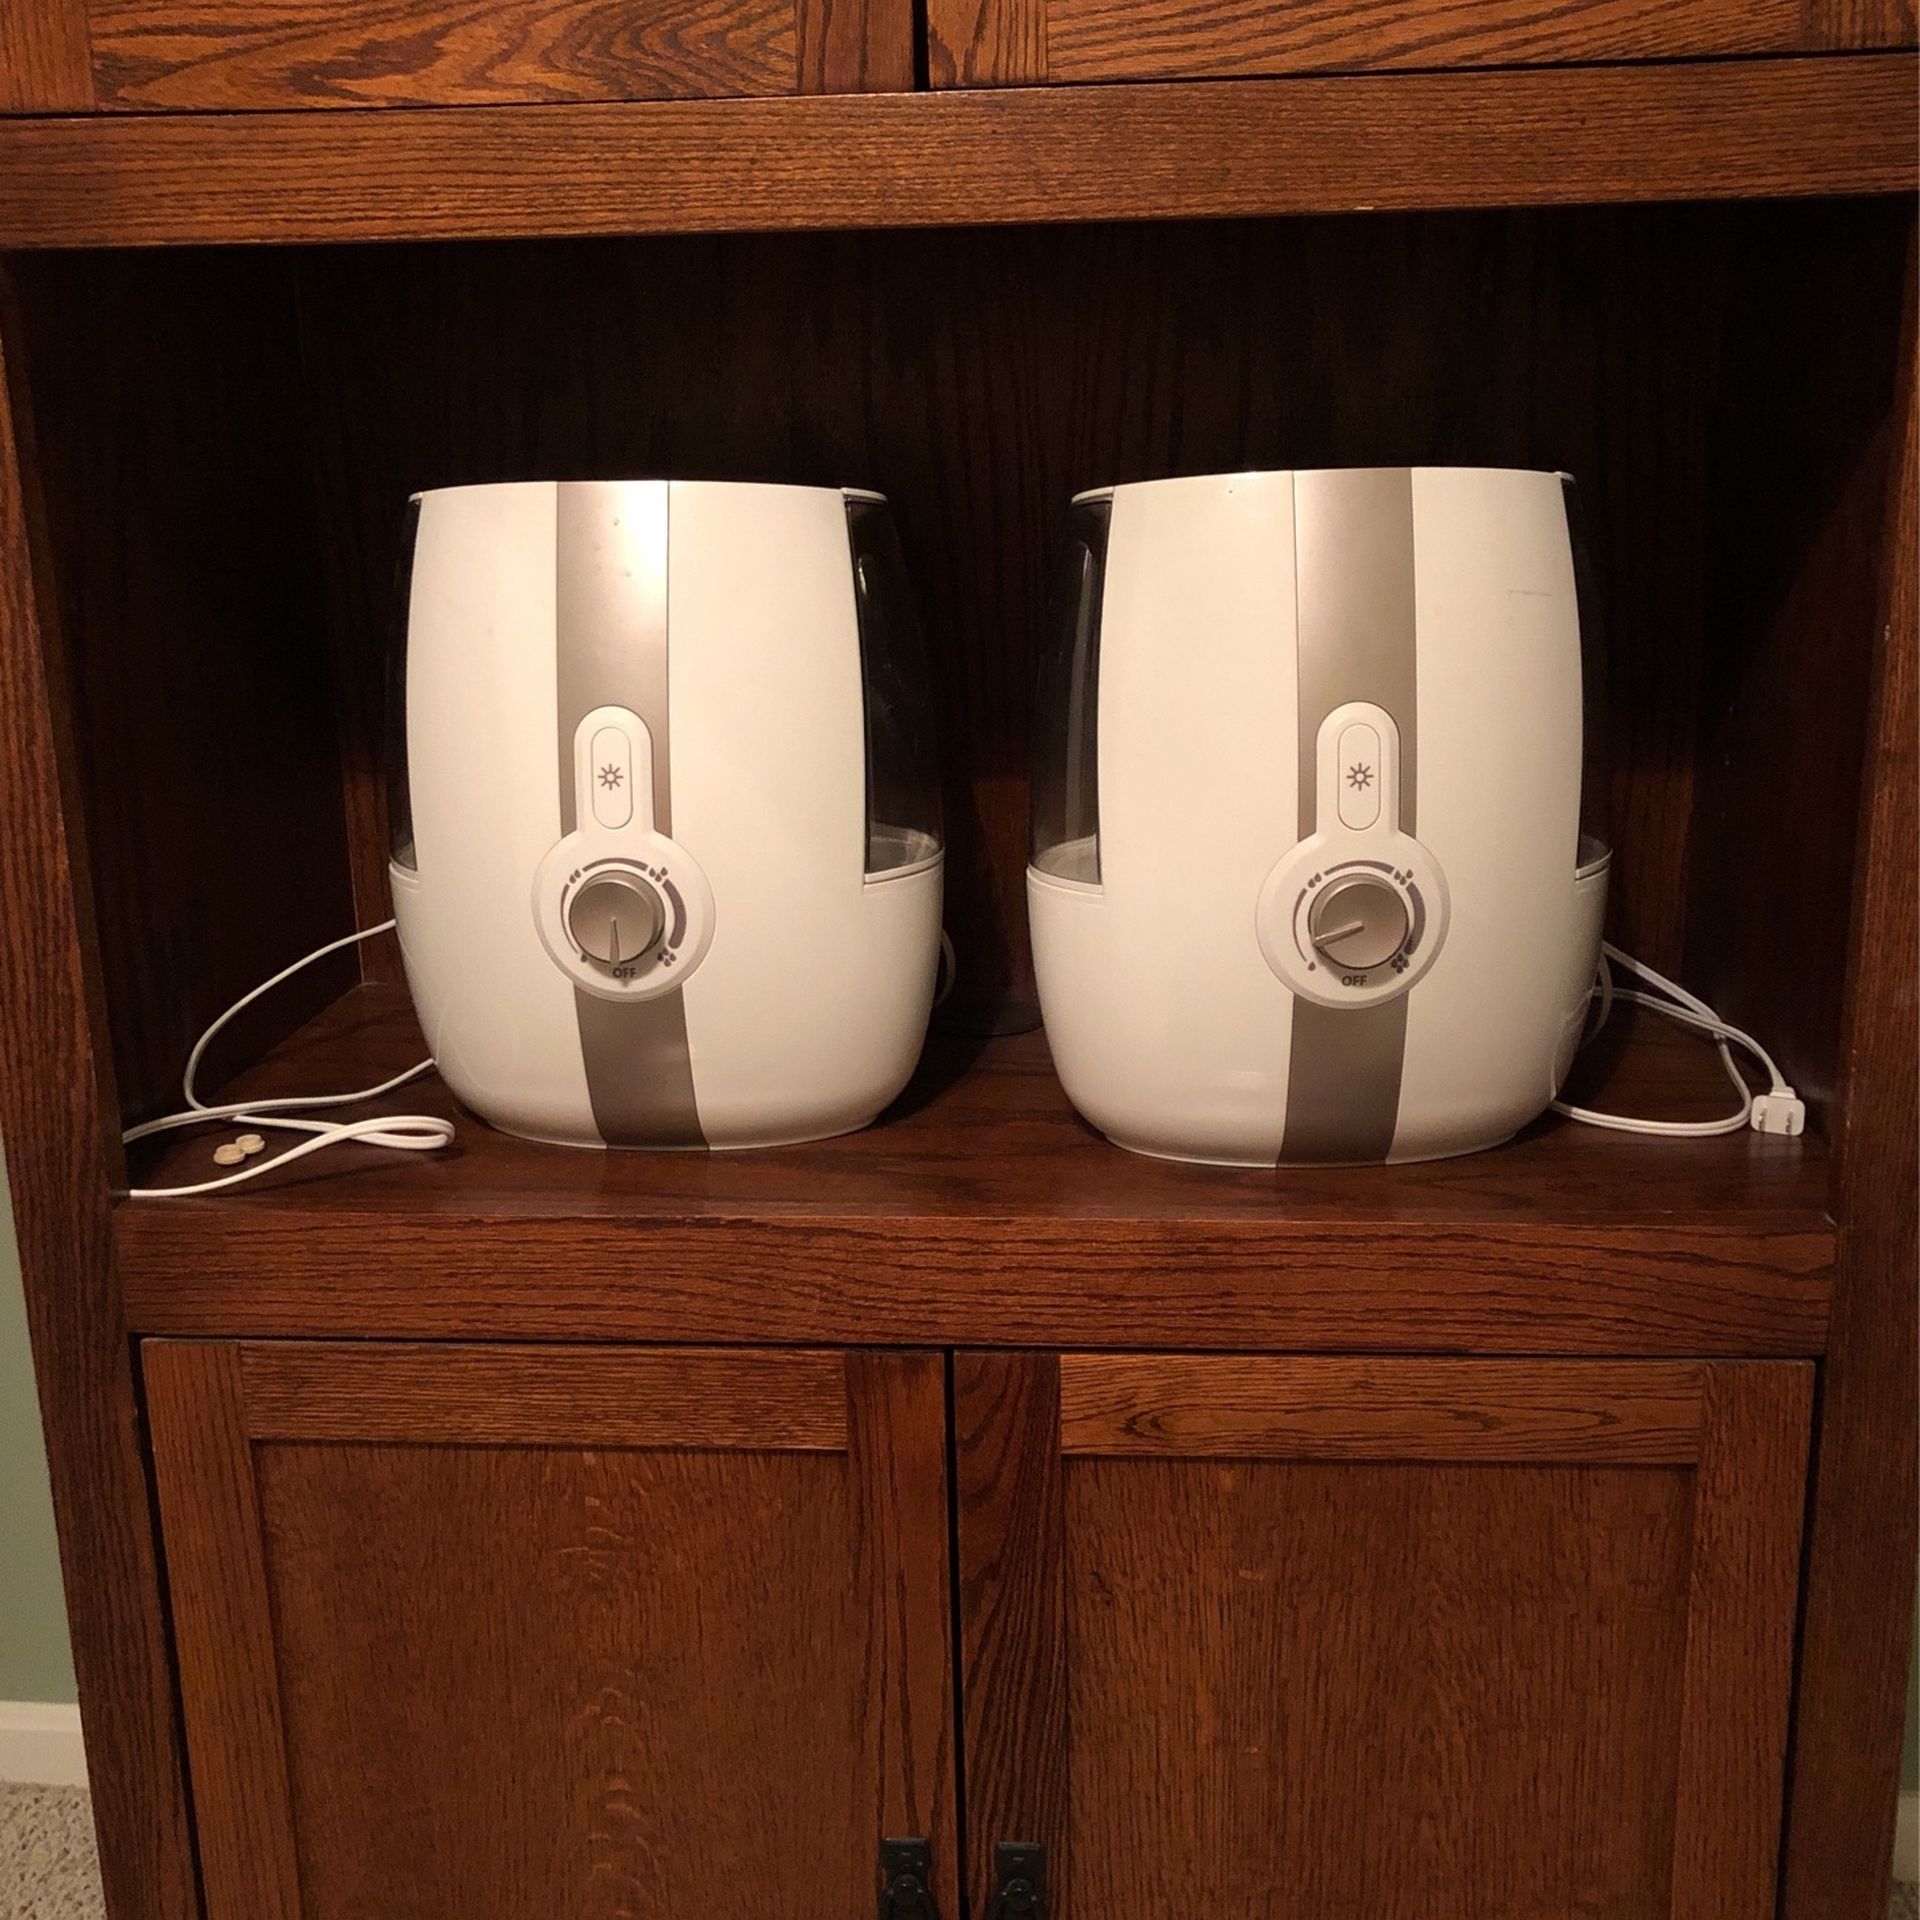 Homedics Humidifiers